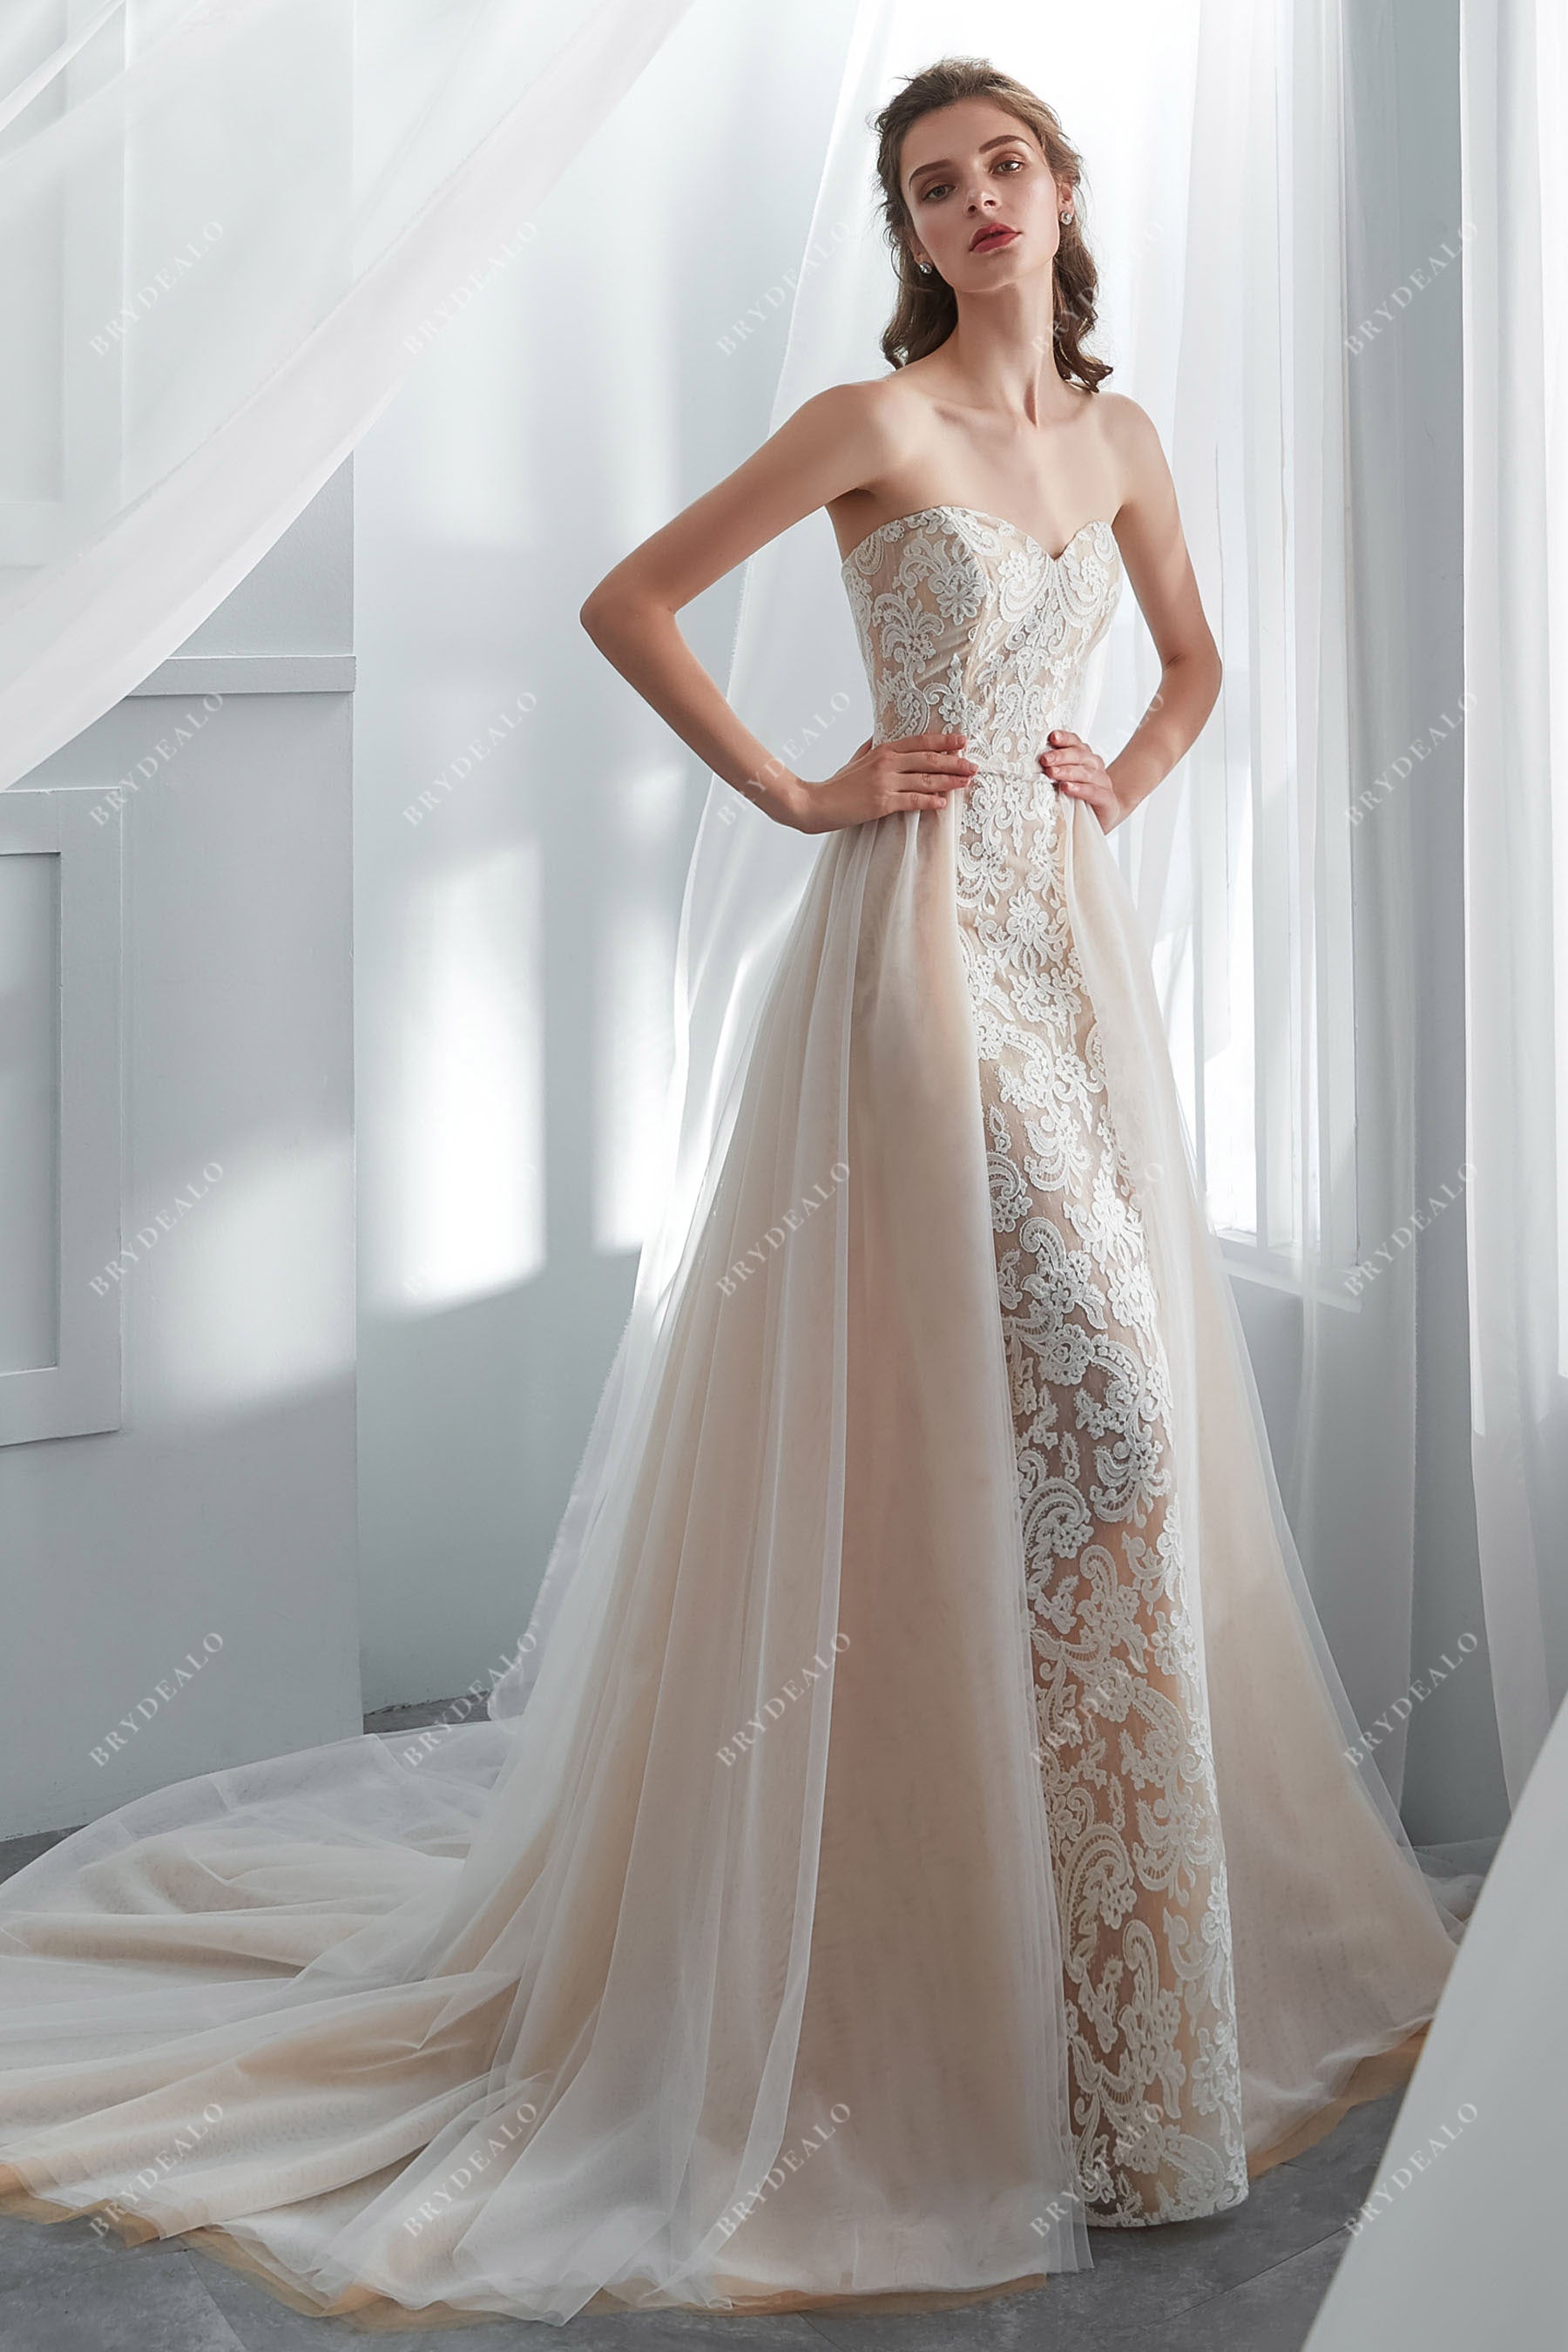 Designer Lace Overskirt Mermaid Wedding Gown Online